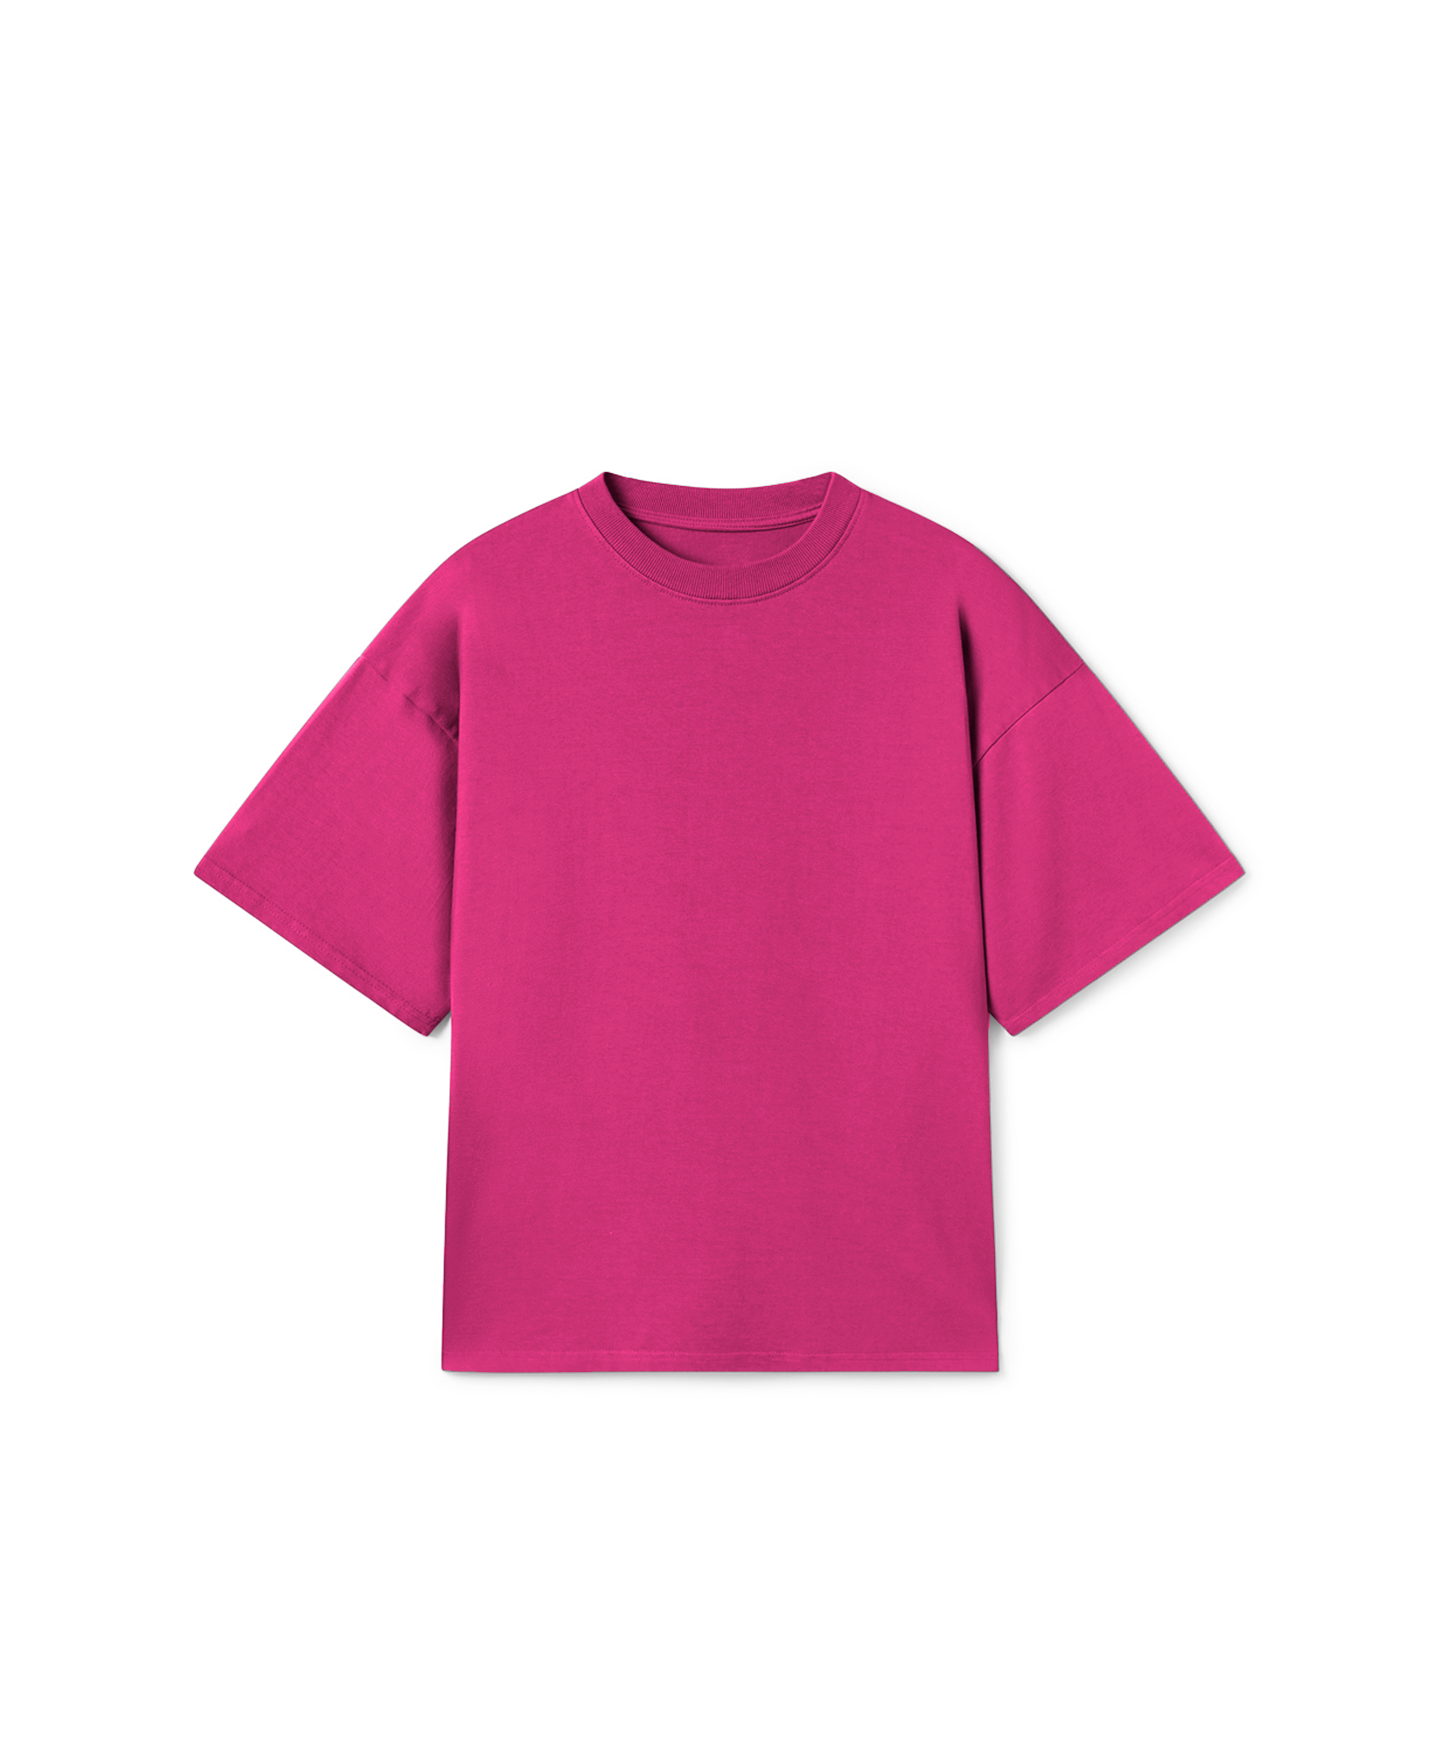 Wholesale Pink T-Shirts, Buy Bulk Pink Tees